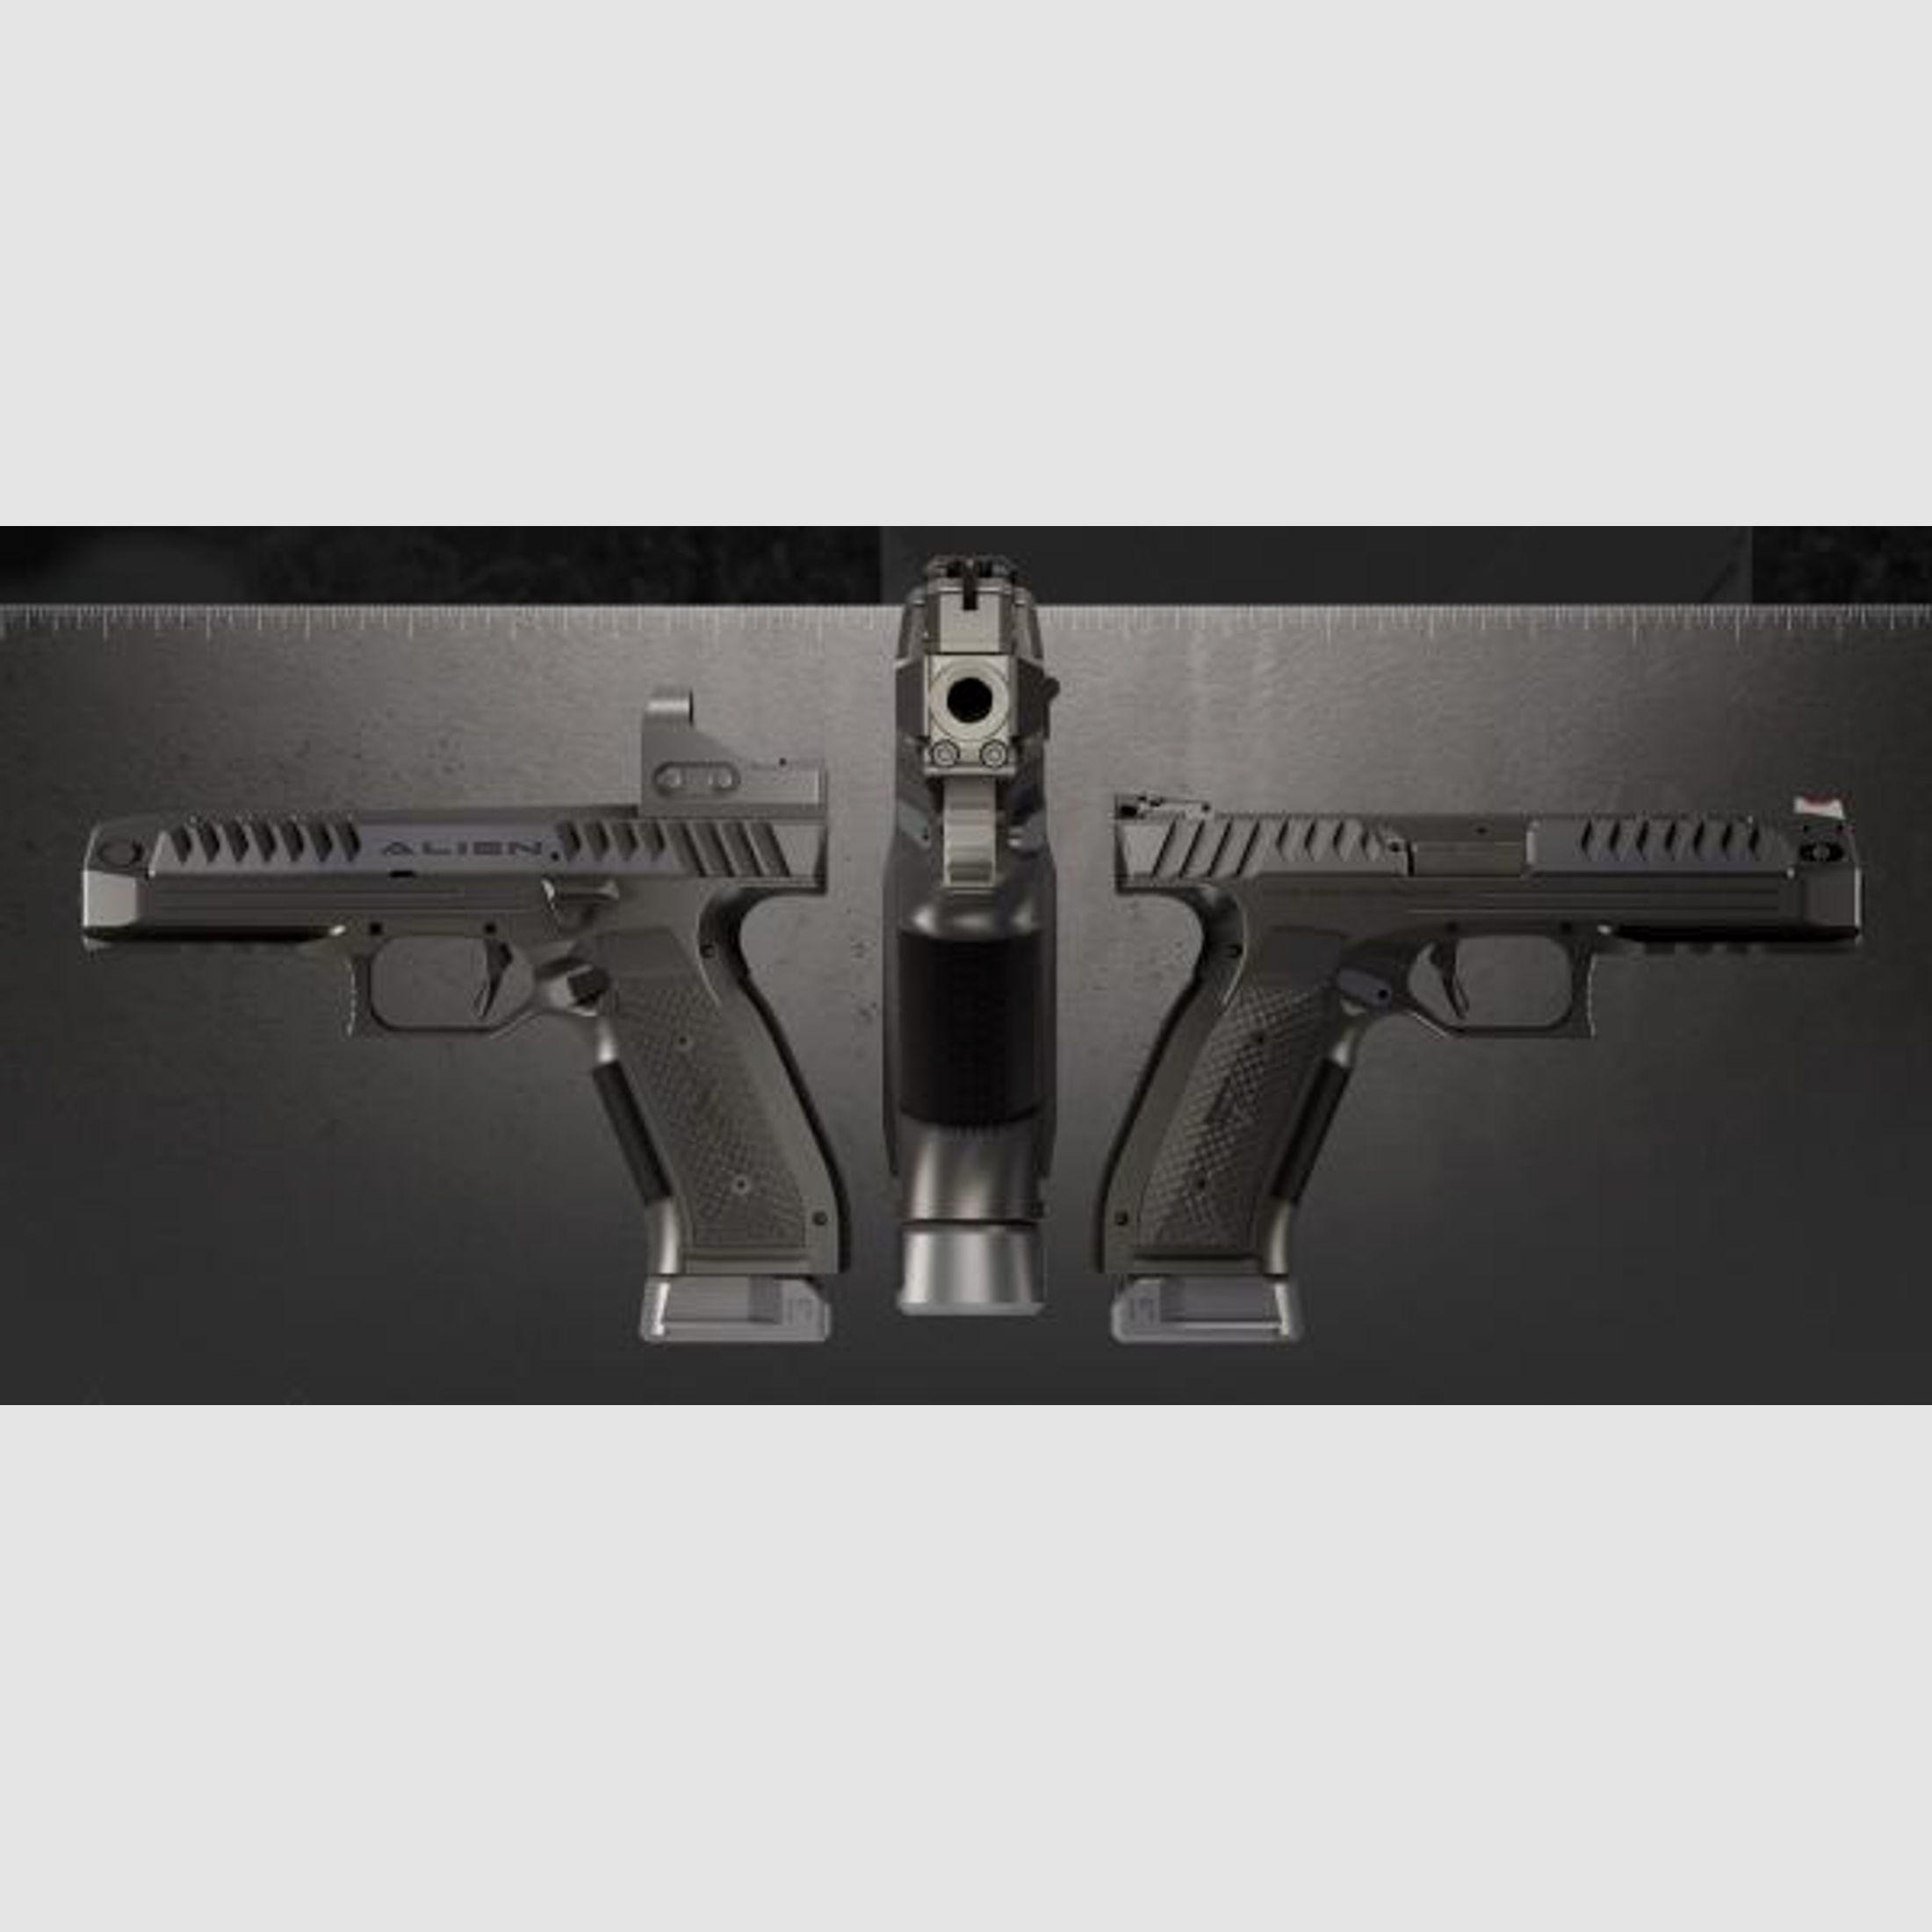 Laugo Arms Pistole Mod. ALIEN IPSC Retro 9mmLuger